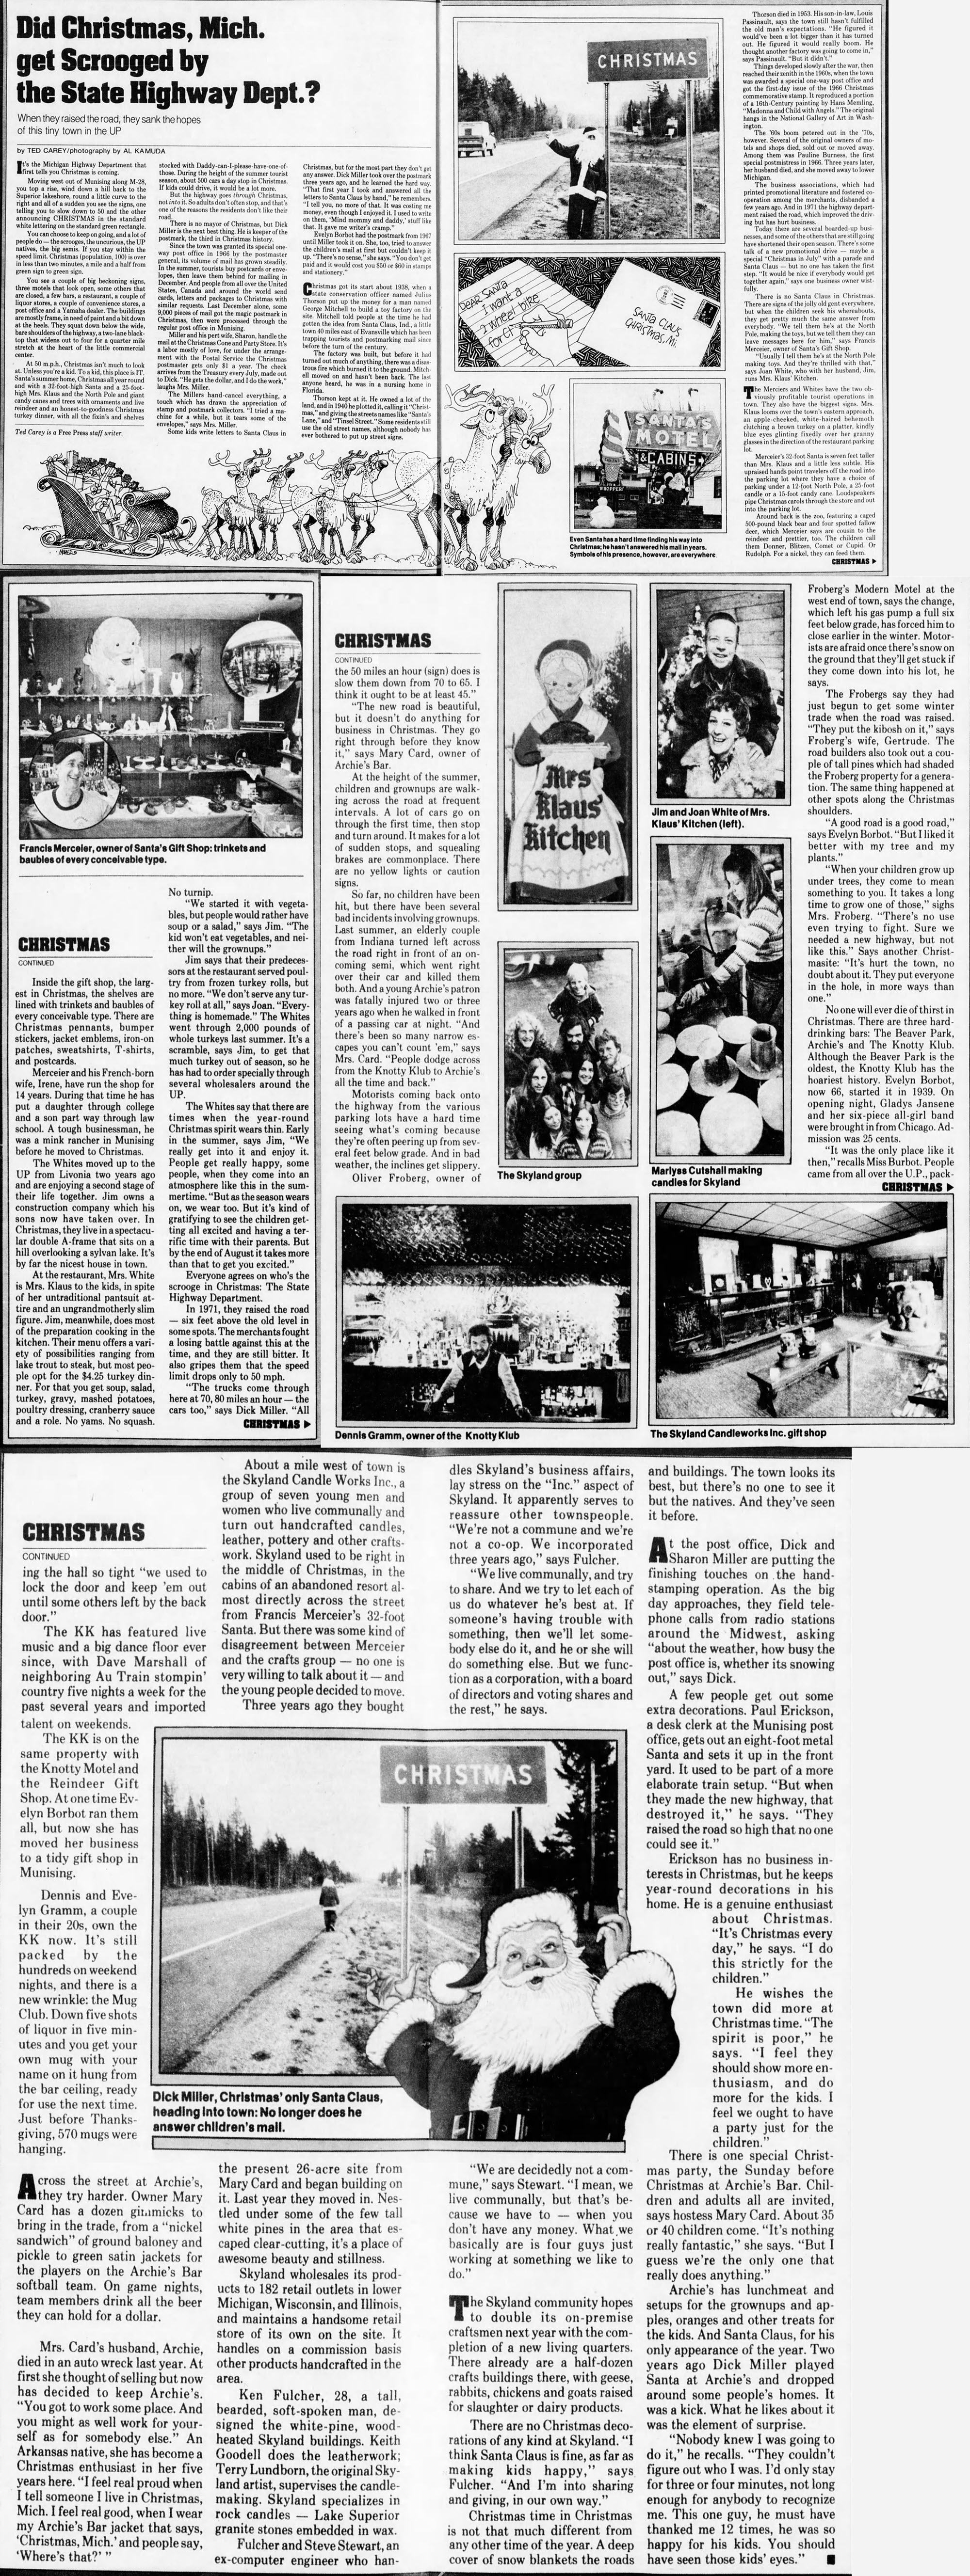 Christmas - Dec 25 1977 Feature Article